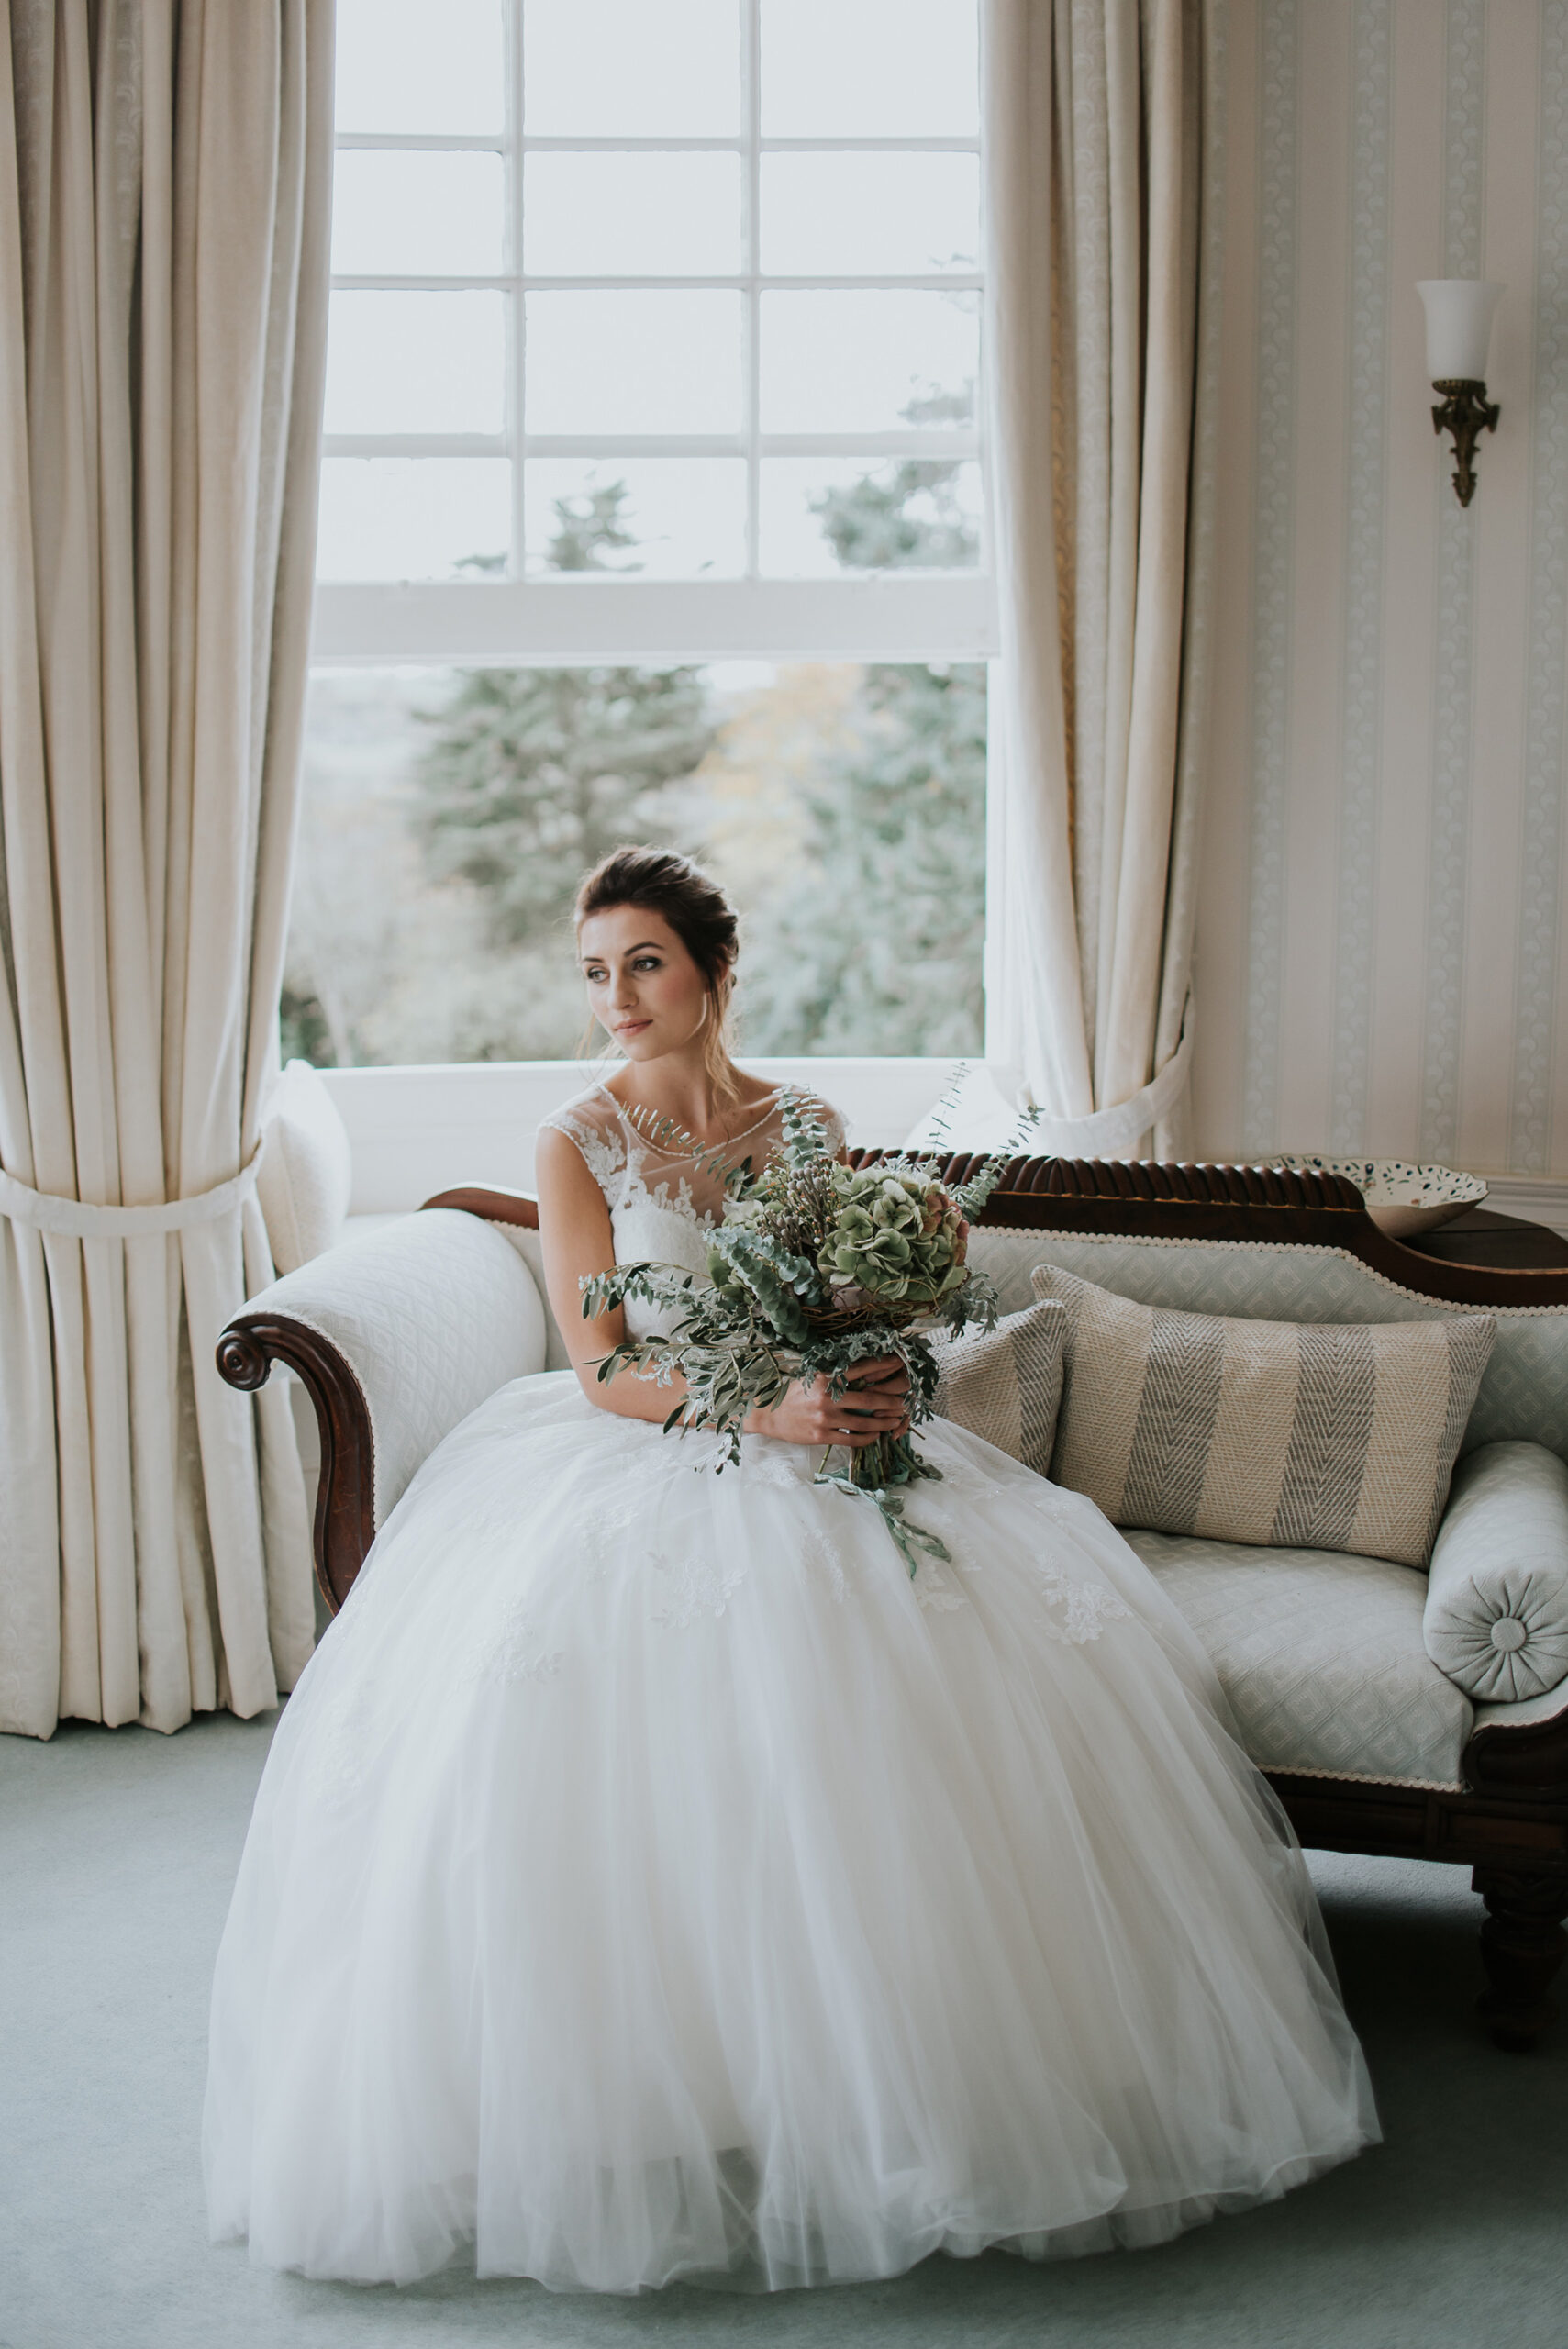 Michelle_Cordner_Photography_Luxe-Winter-Wedding_007